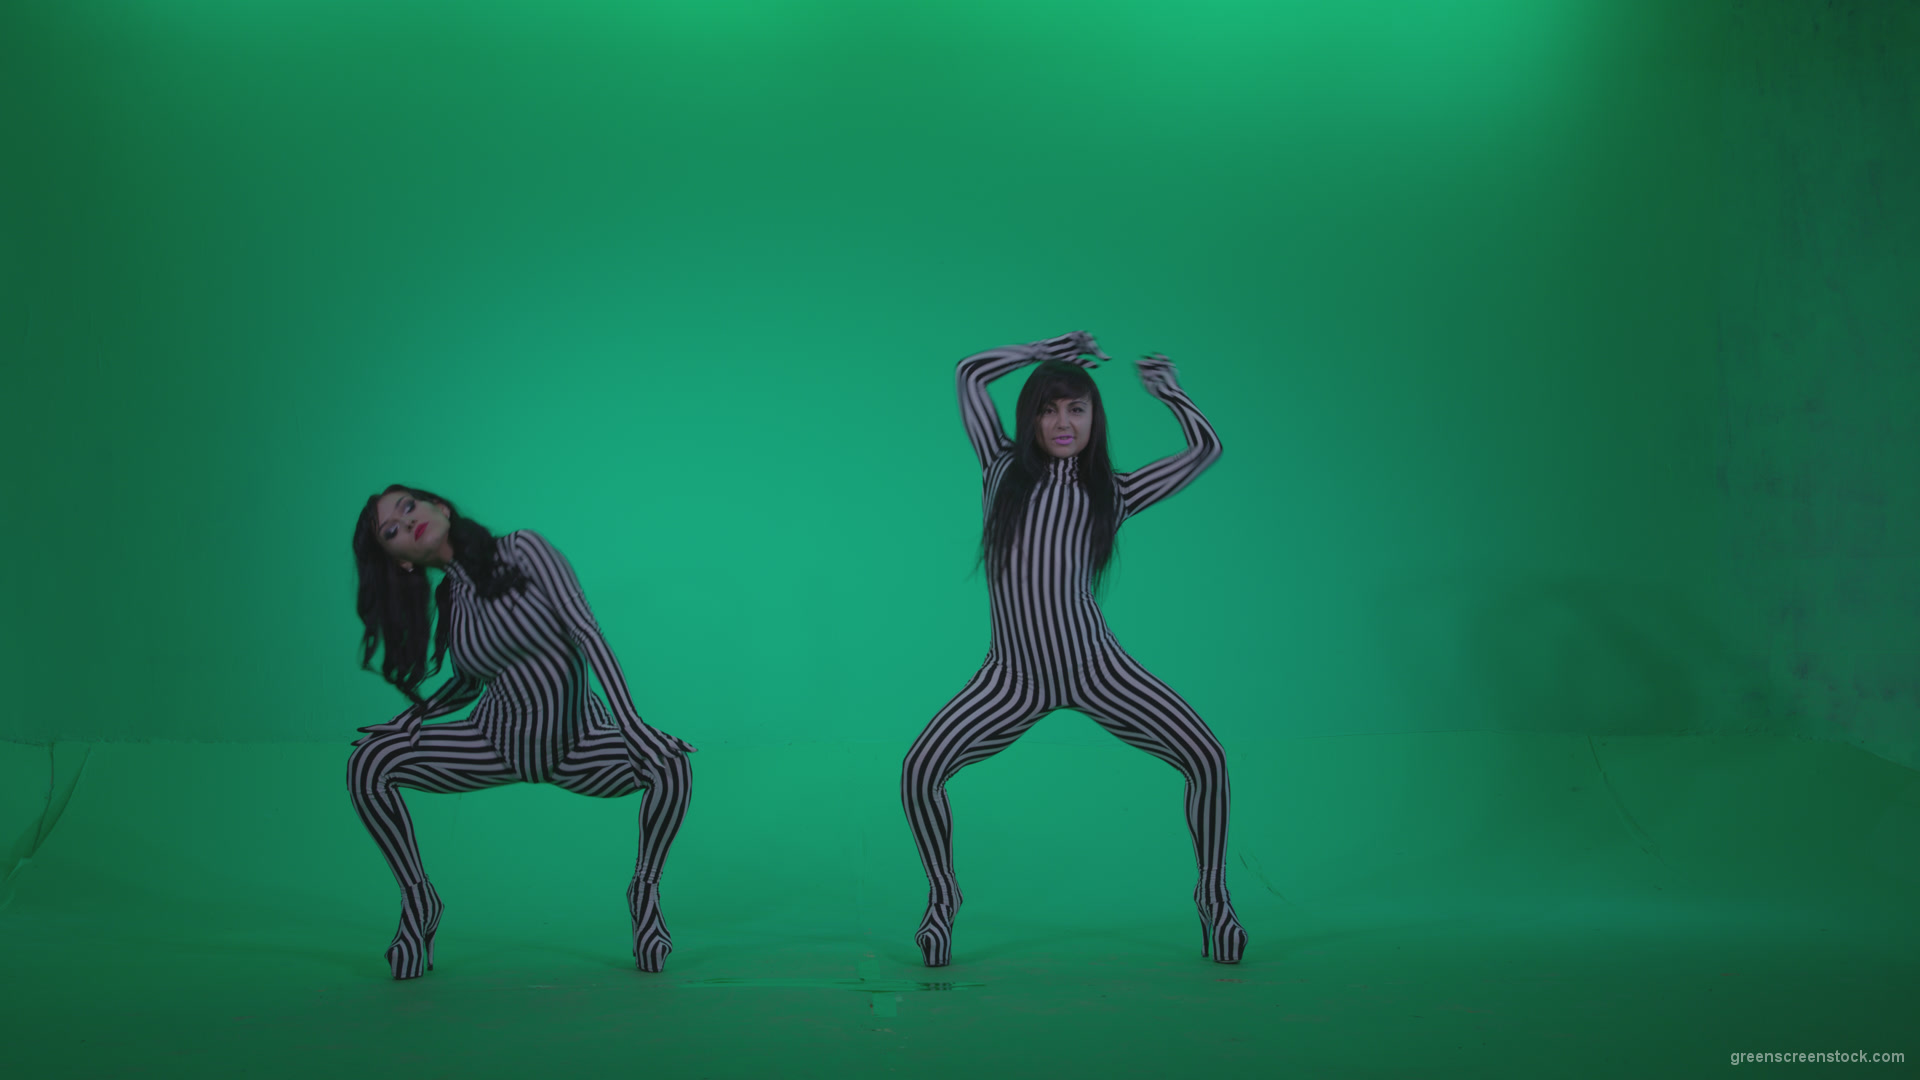 Go-go-Dancer-White-Stripes-s1-Green-Screen-Video-Footage_002 Green Screen Stock